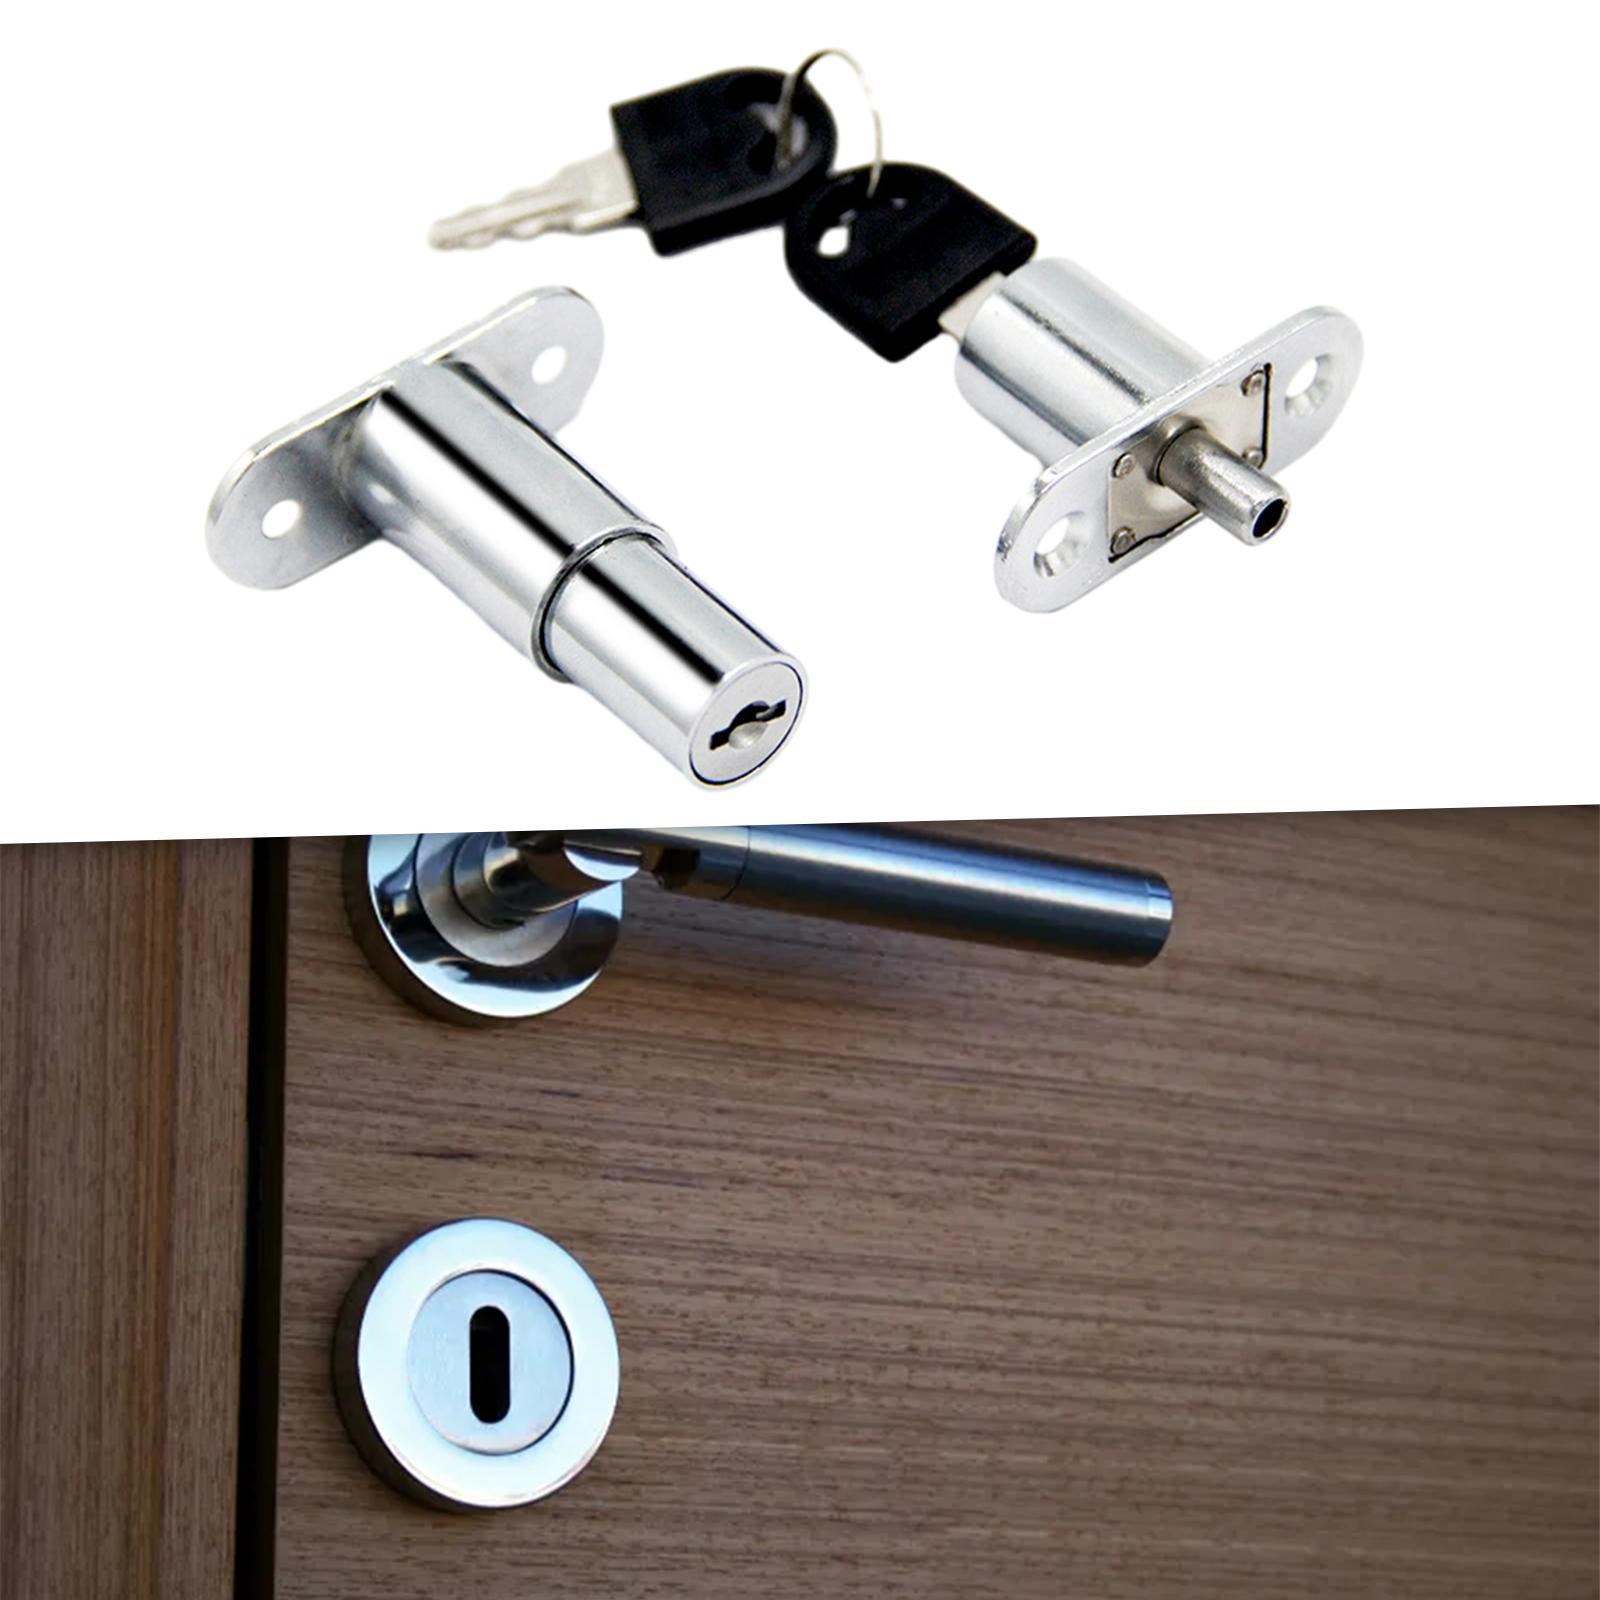 Sliding Door Window Lock with Keys Counter Lock for Fridge Lock Mailbox Lock